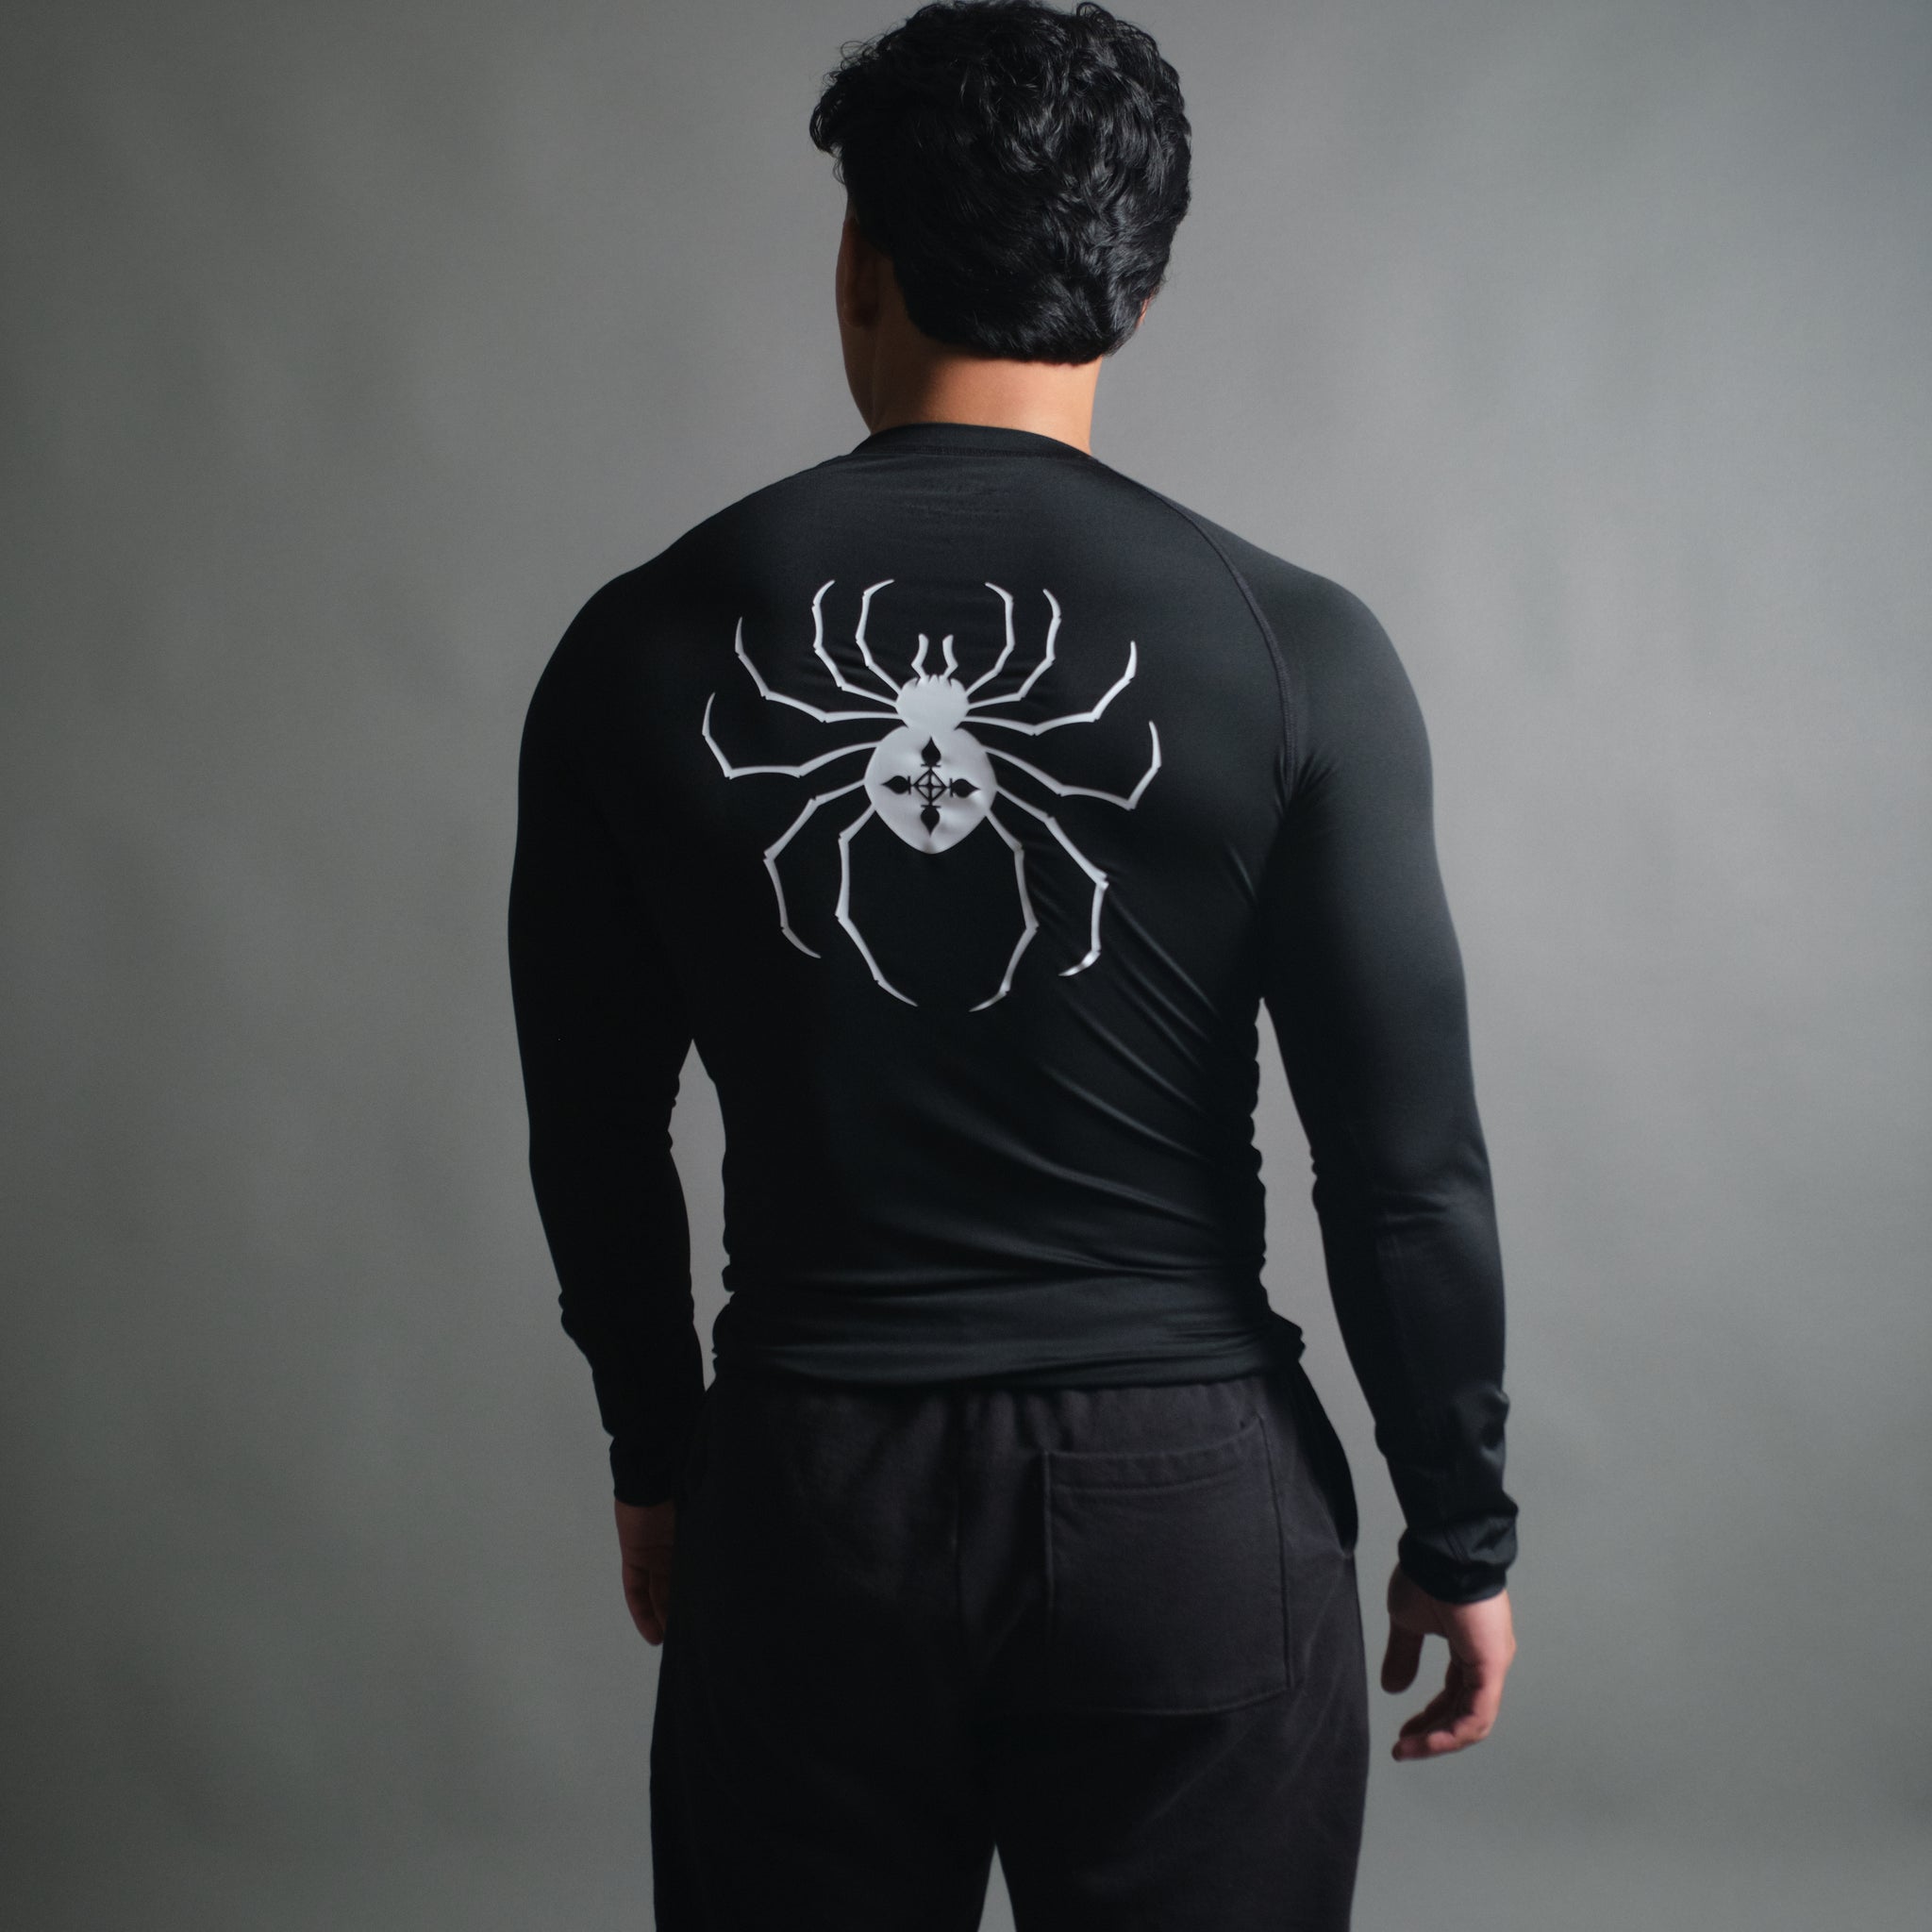 Chrollo Spider Compression Long Sleeve in Black